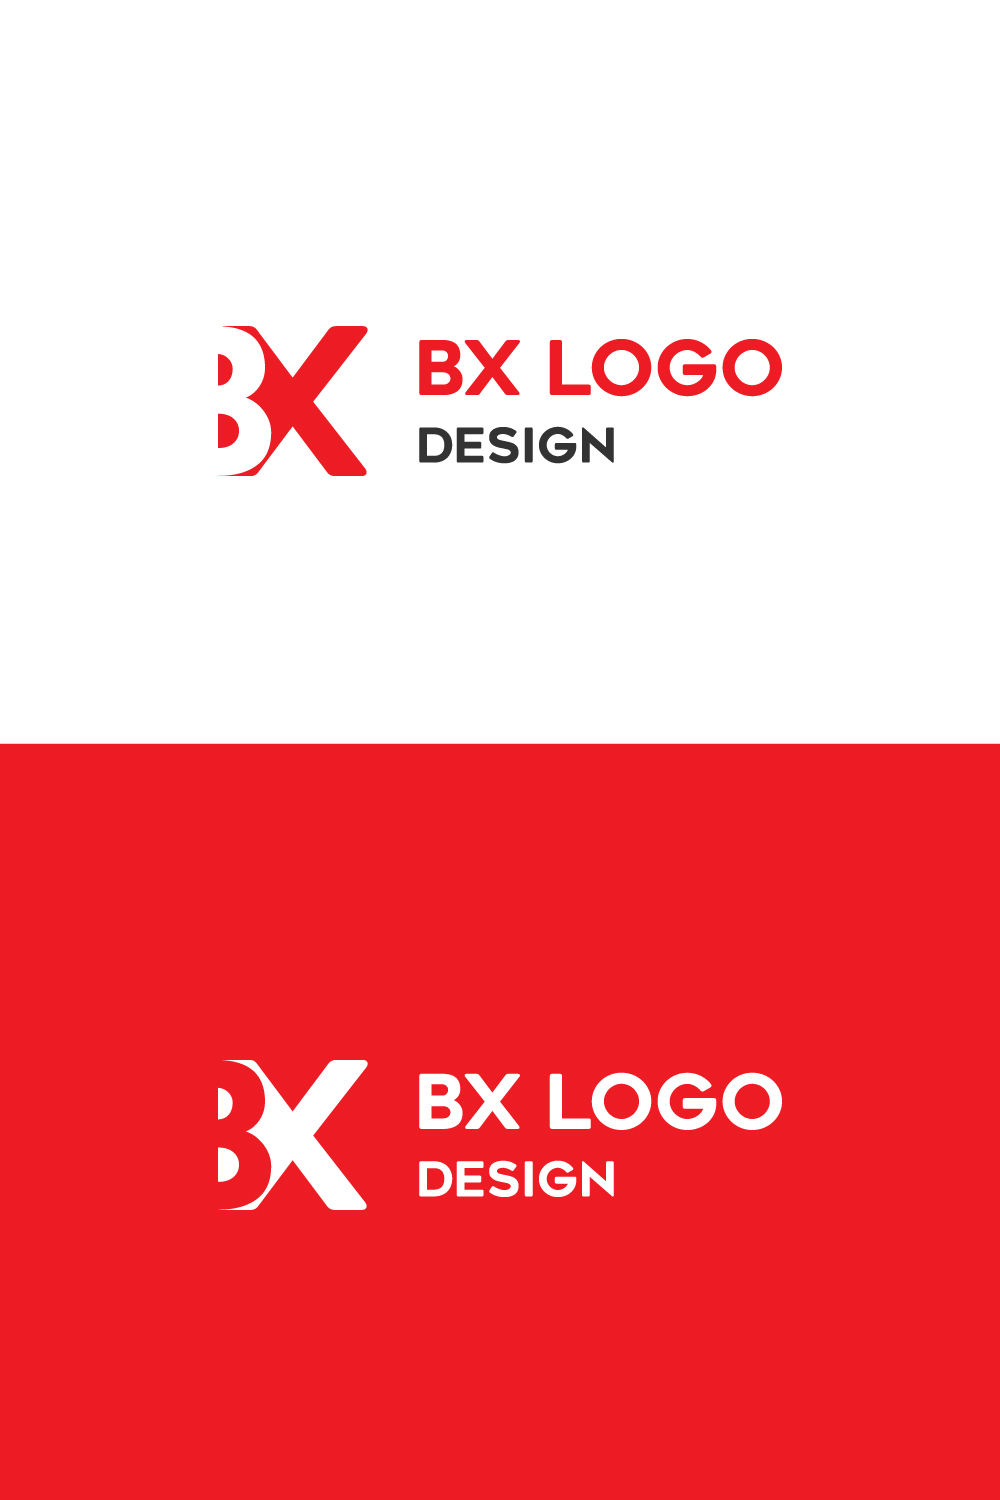 BX logo pinterest preview image.